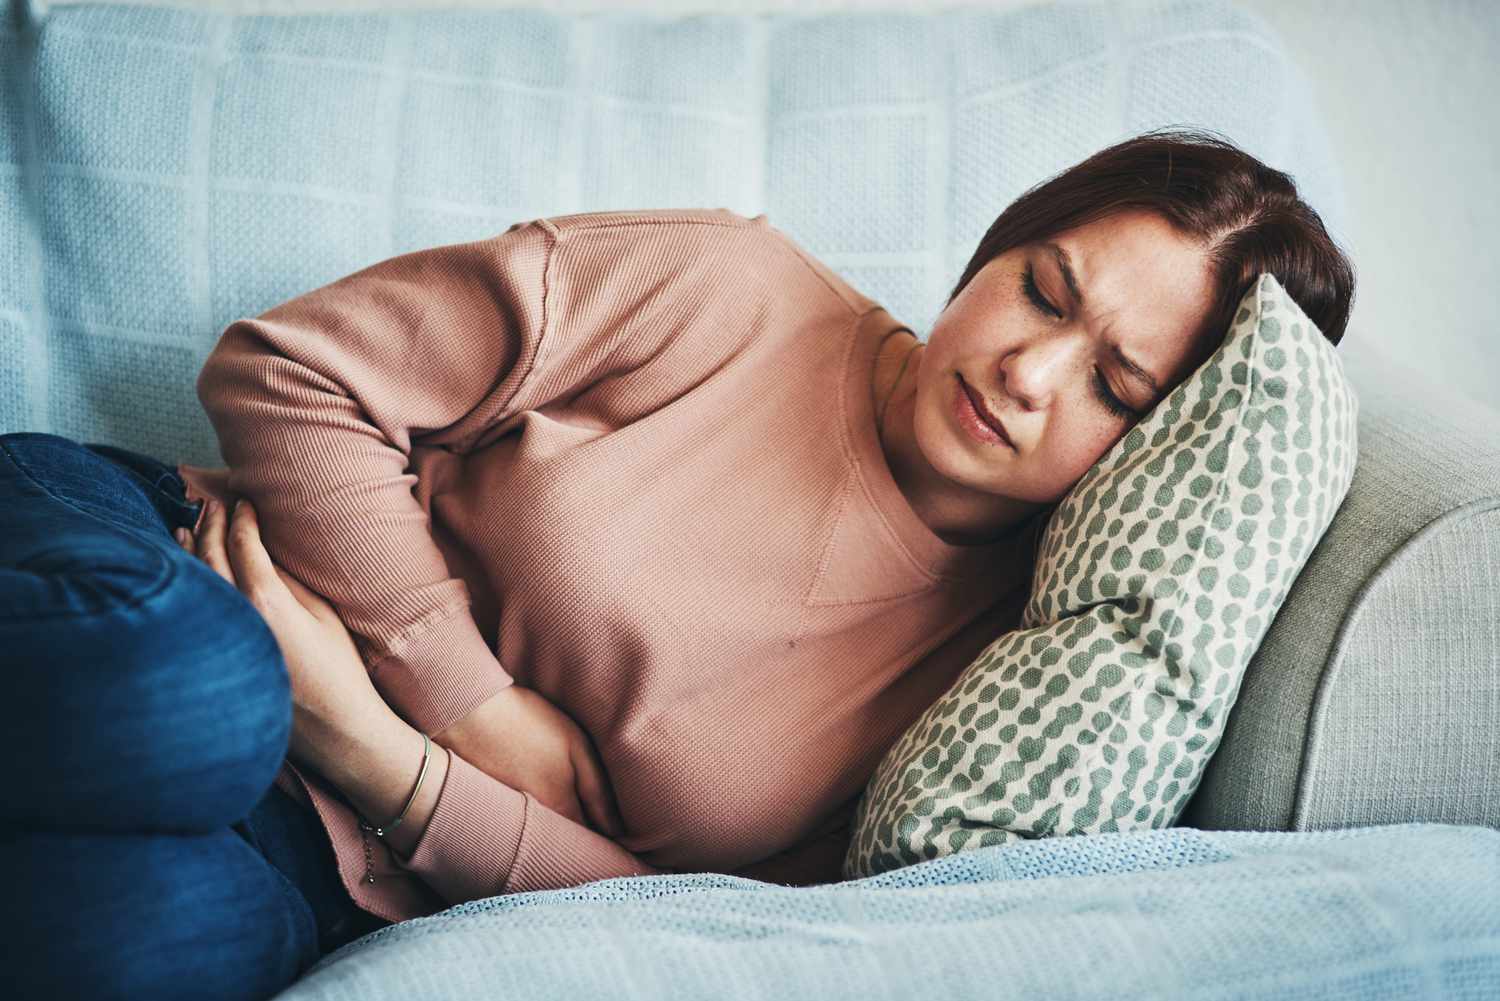 Women lying on couch not feeling well